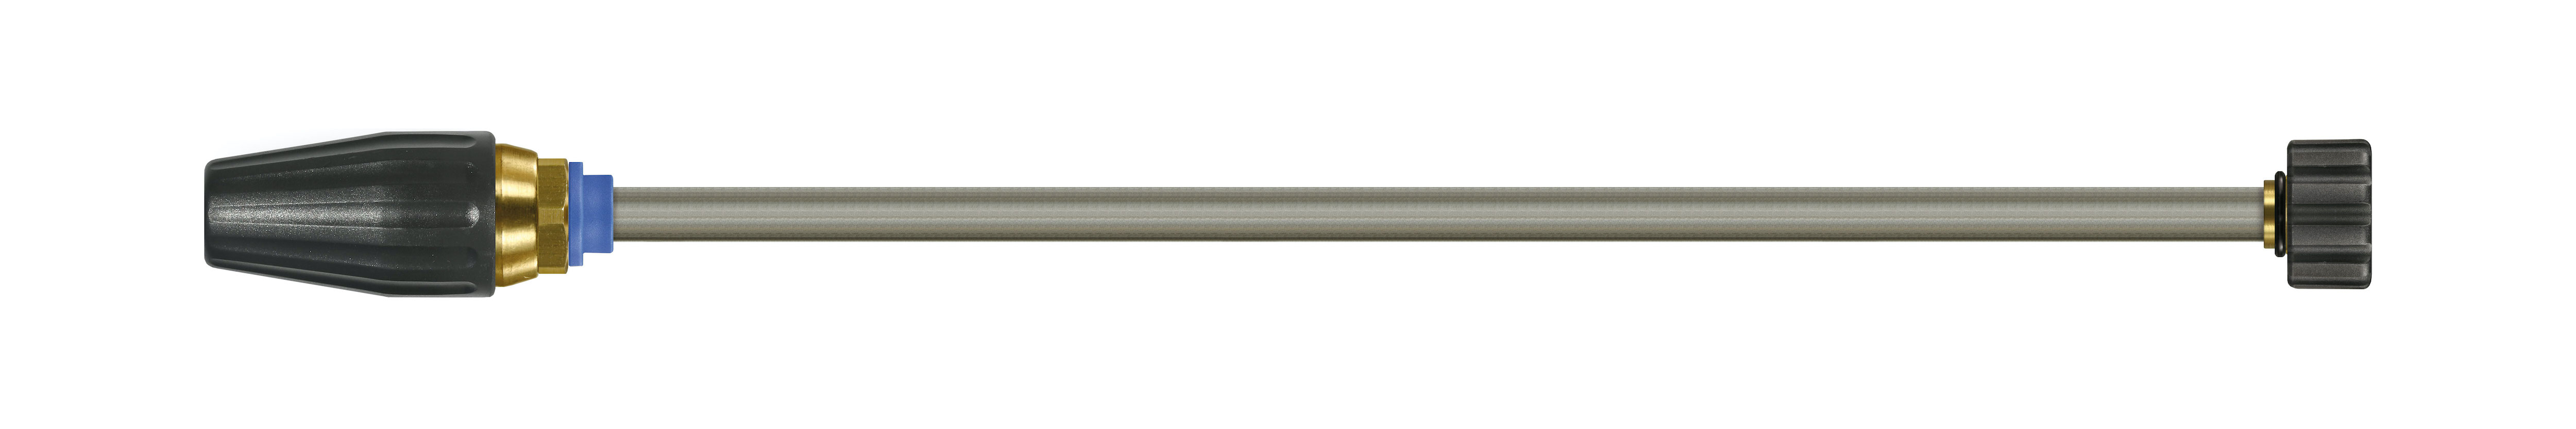 Rotabuse céramique avec lance 430mm, 100-250 bar, Calibre 030.